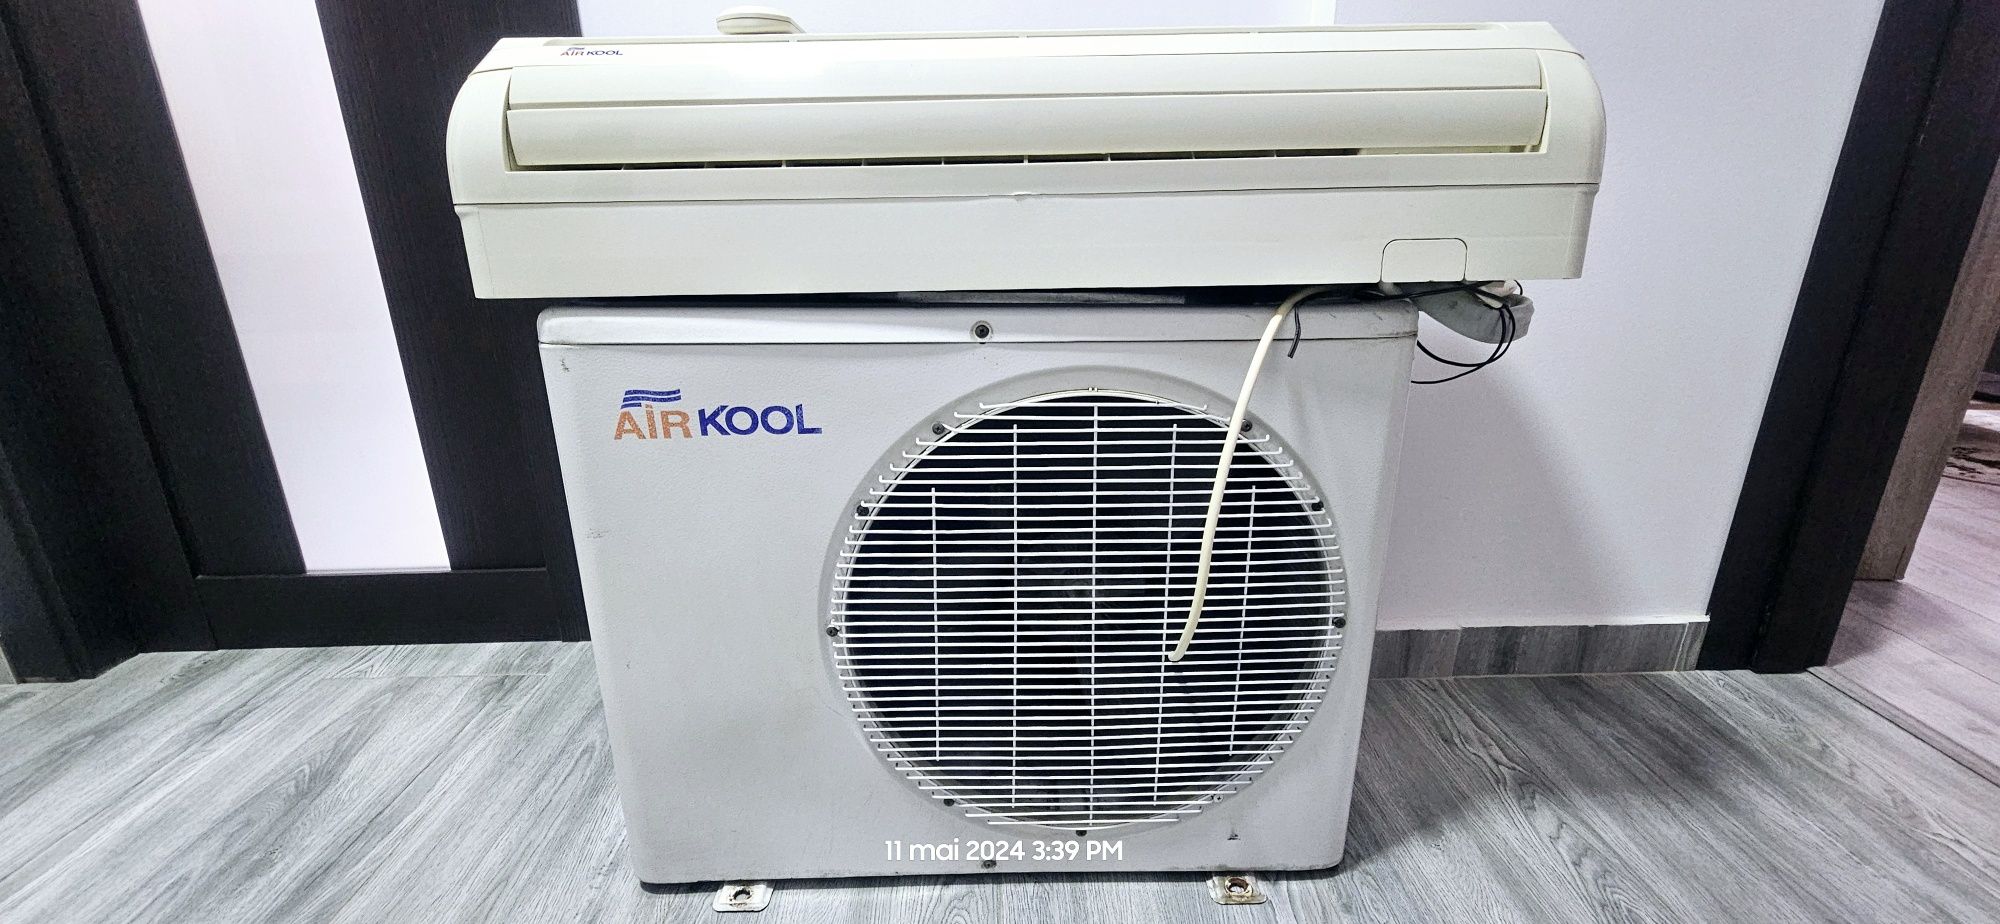 Aer conditionat Air Kool 12000 btu